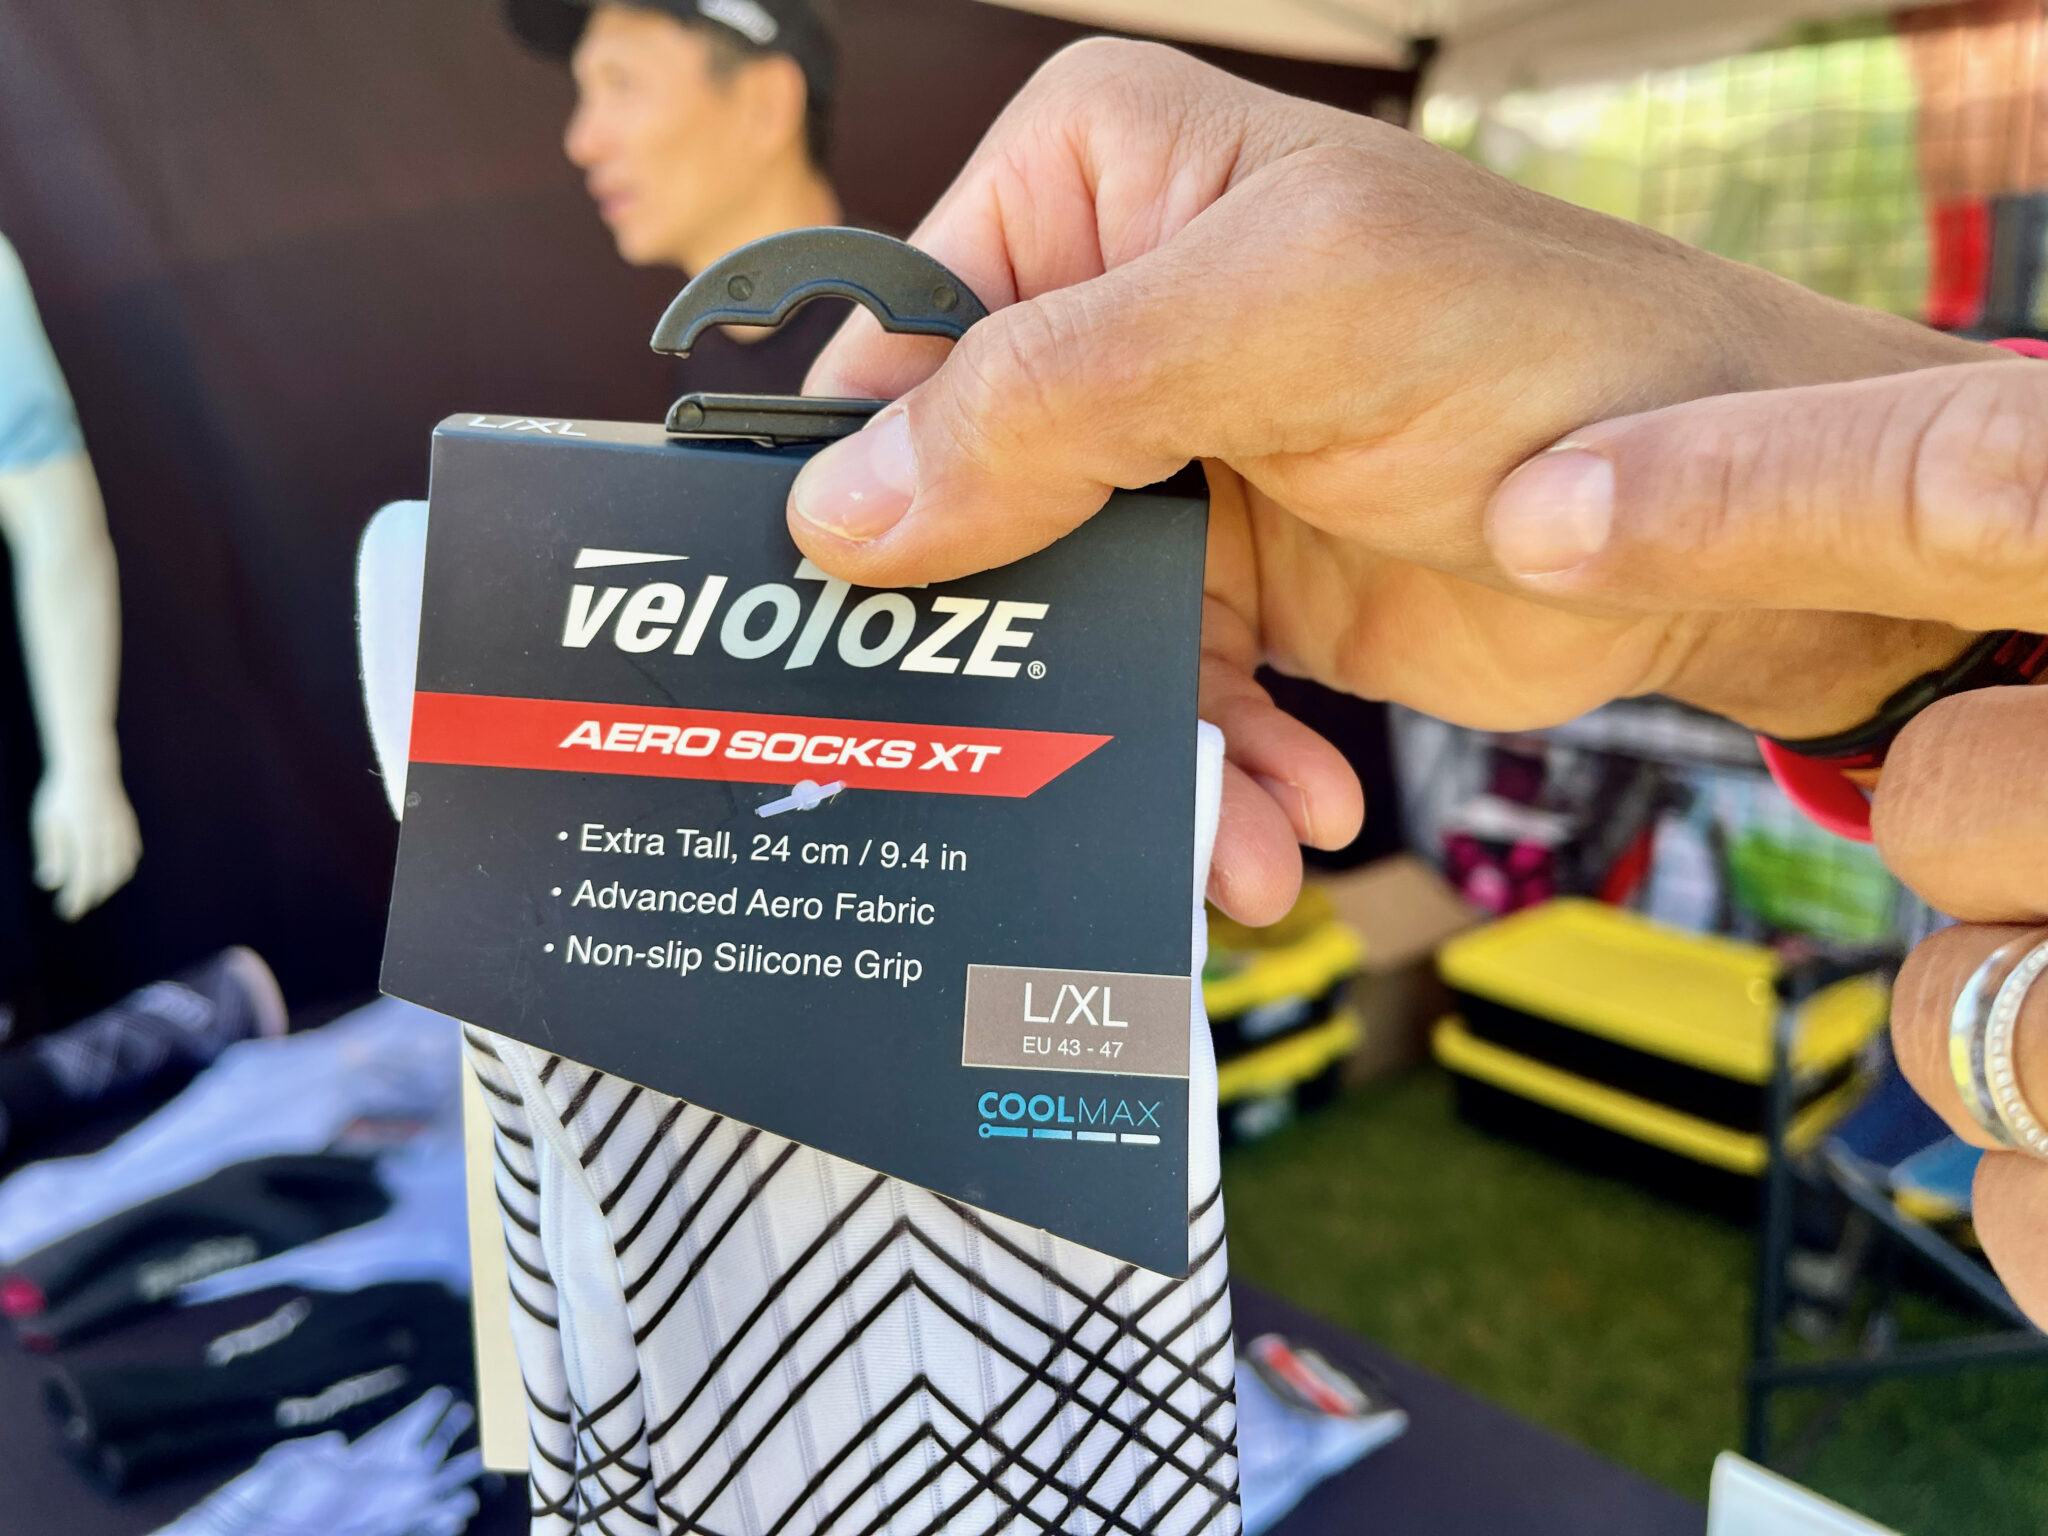 VeloToze Exhibits New Biking Kits and Improved Aero Sock Designs ...